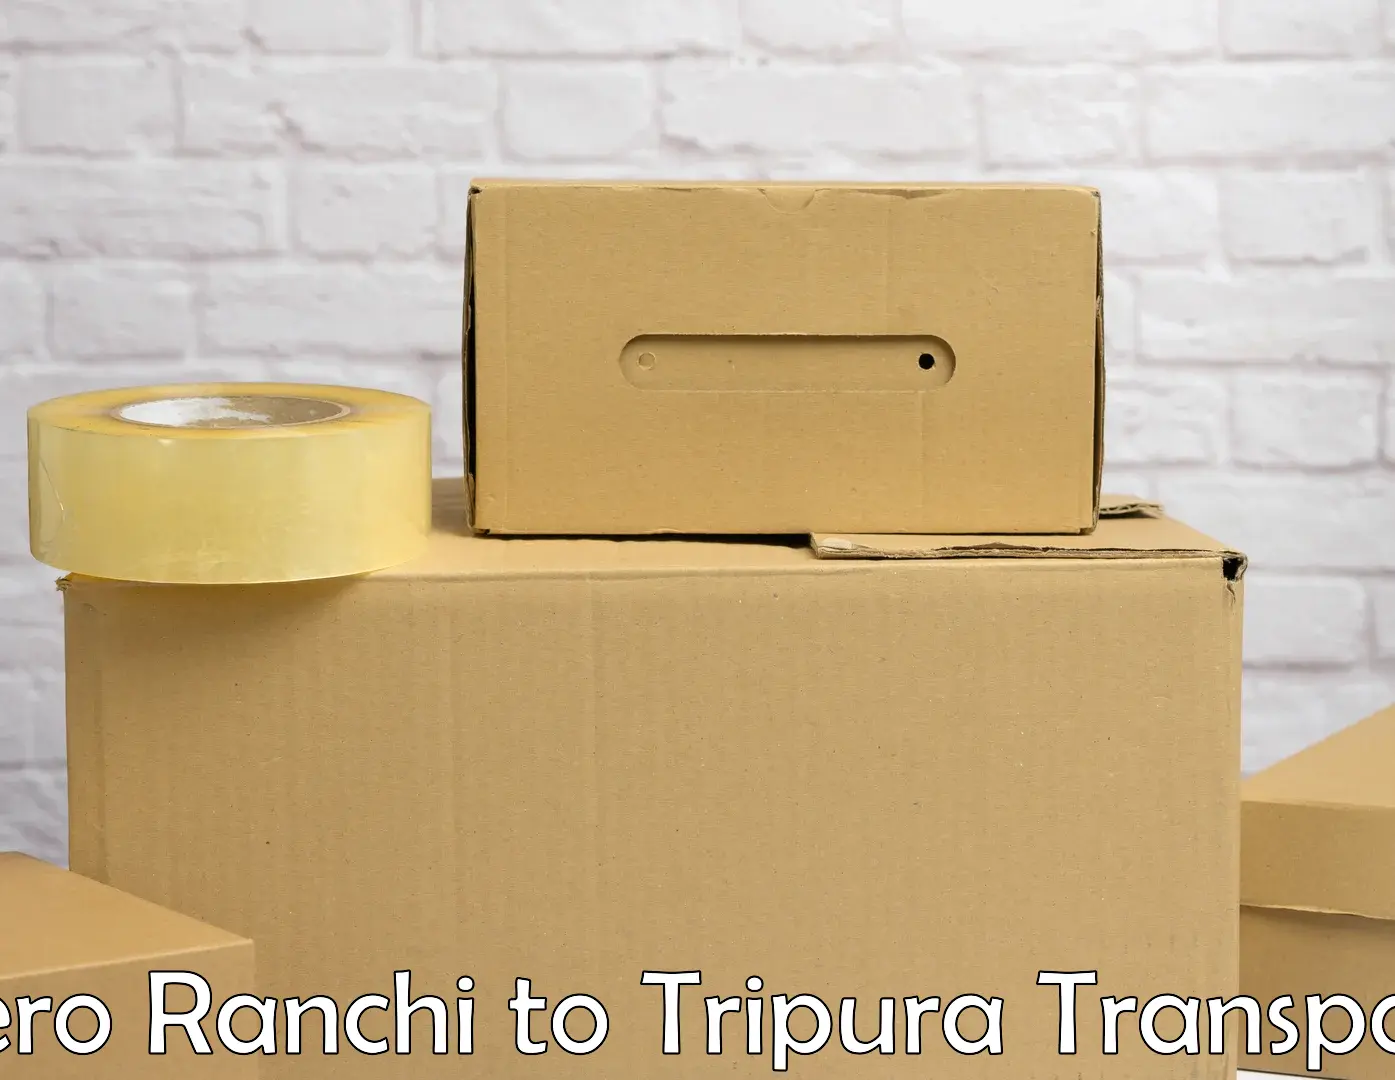 Vehicle parcel service Bero Ranchi to Udaipur Tripura